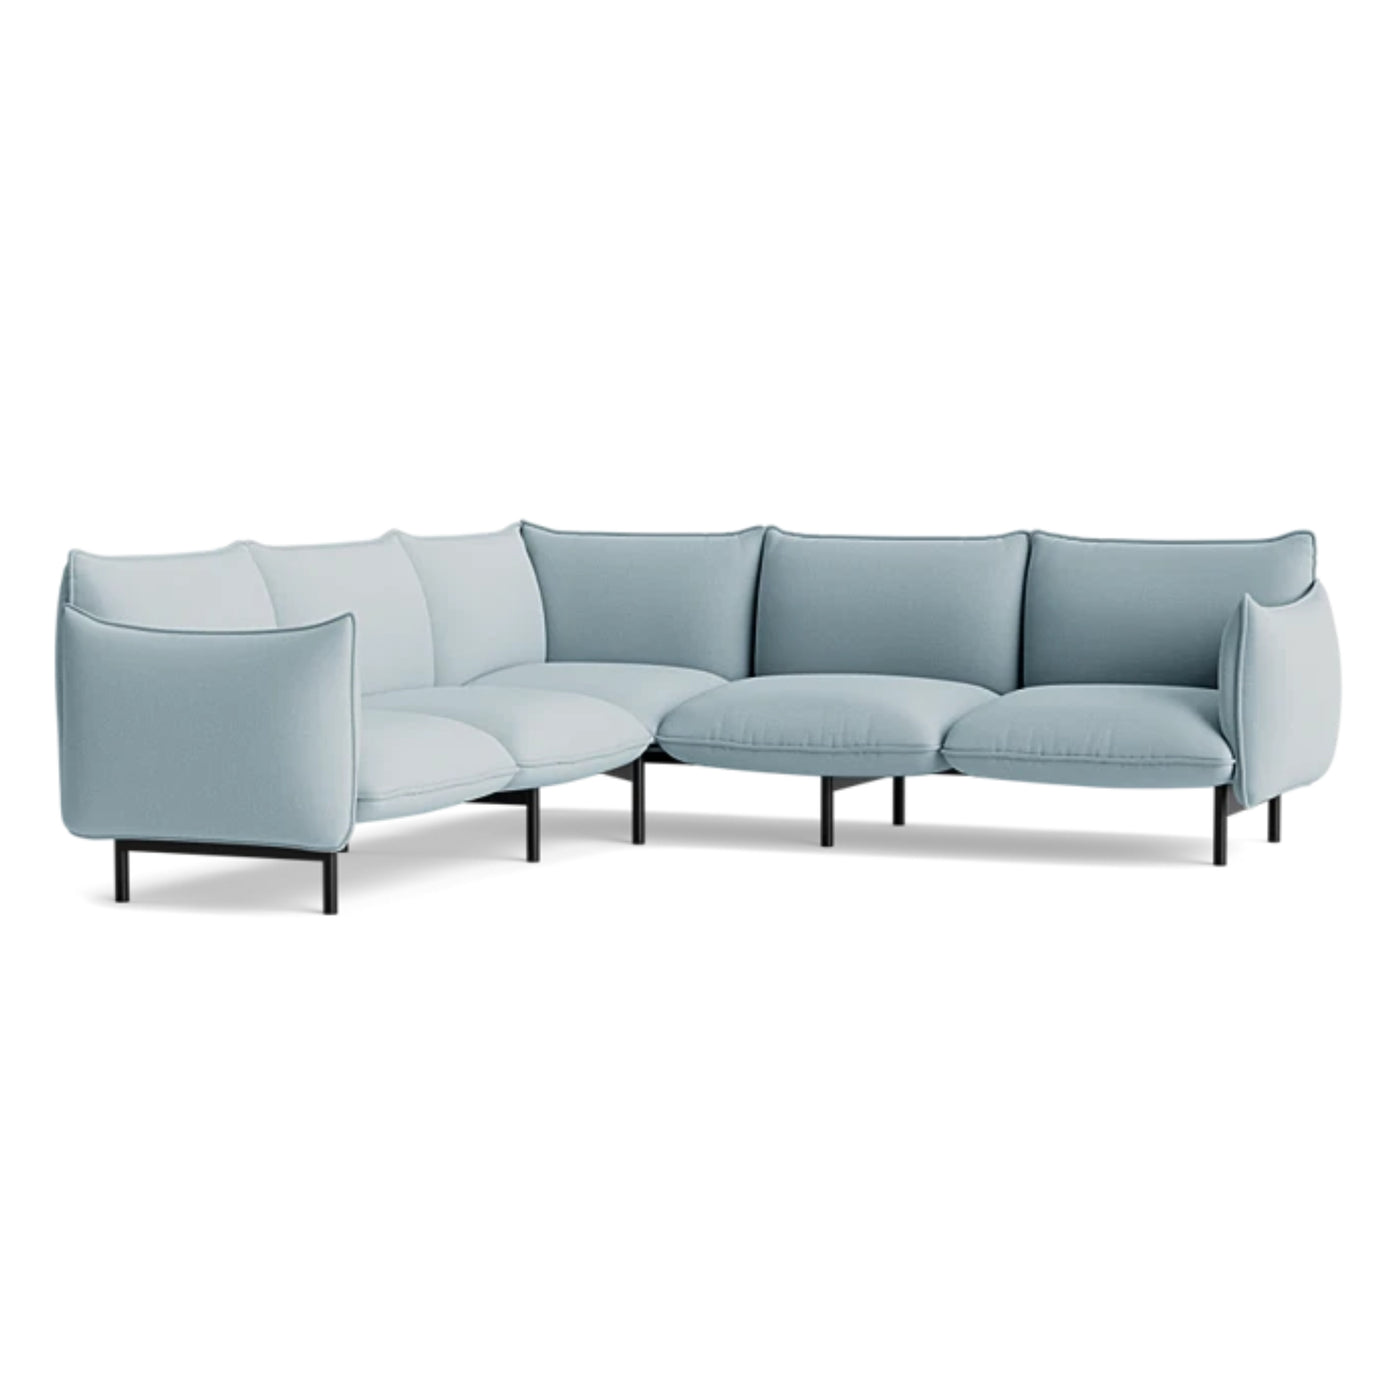 Normann Copenhagen Ark 4 Seater Corner Modular Sofa at someday designs. #colour_steelcut-trio-713